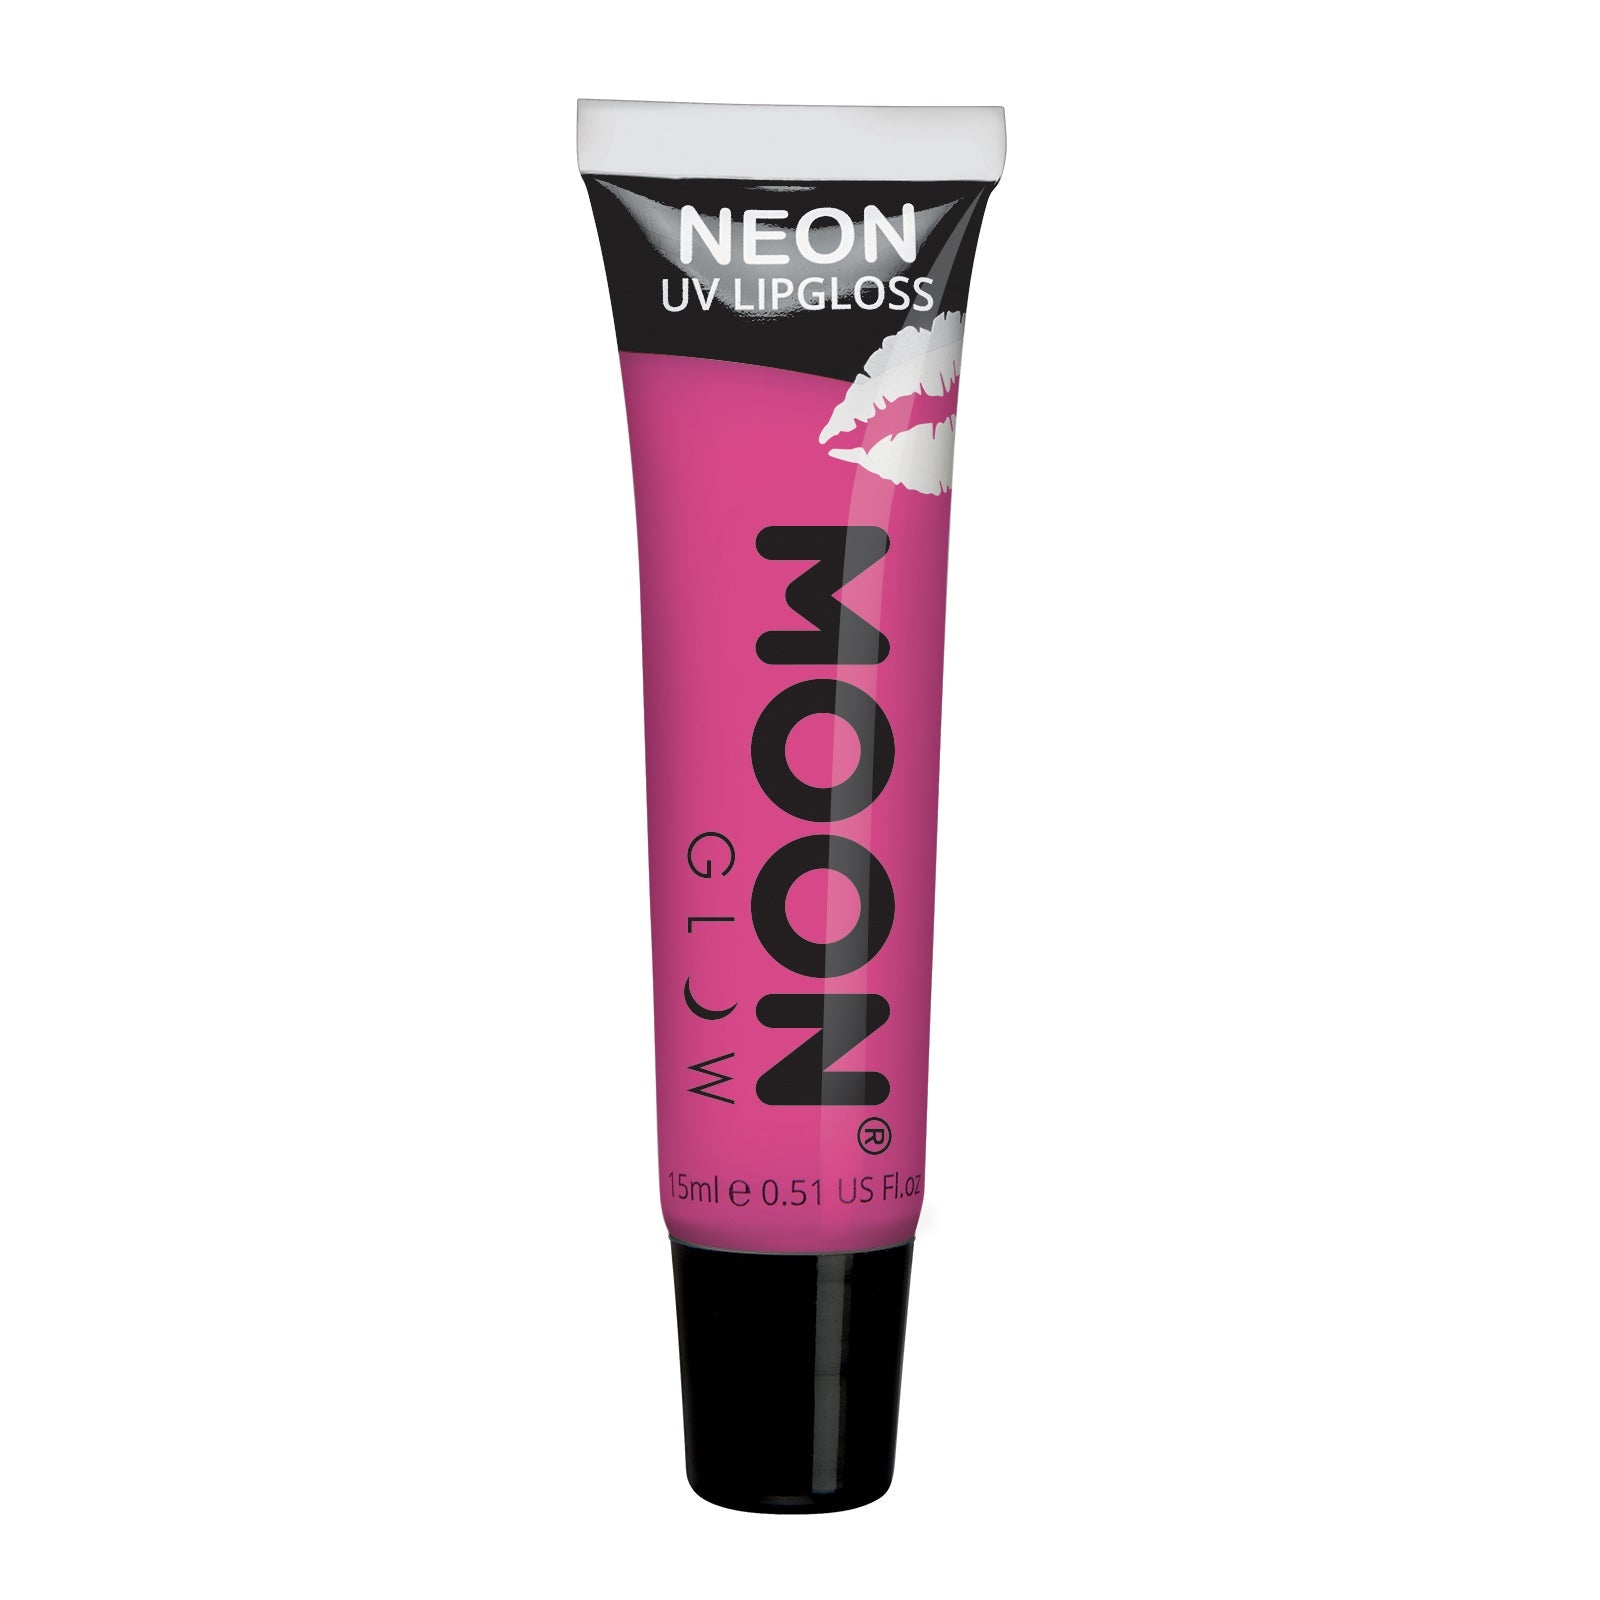 Intense Pink Raspberry - Neon UV Glow Blacklight Lip Gloss, 15mL. Cosmetically certified, FDA & Health Canada compliant, cruelty free and vegan.